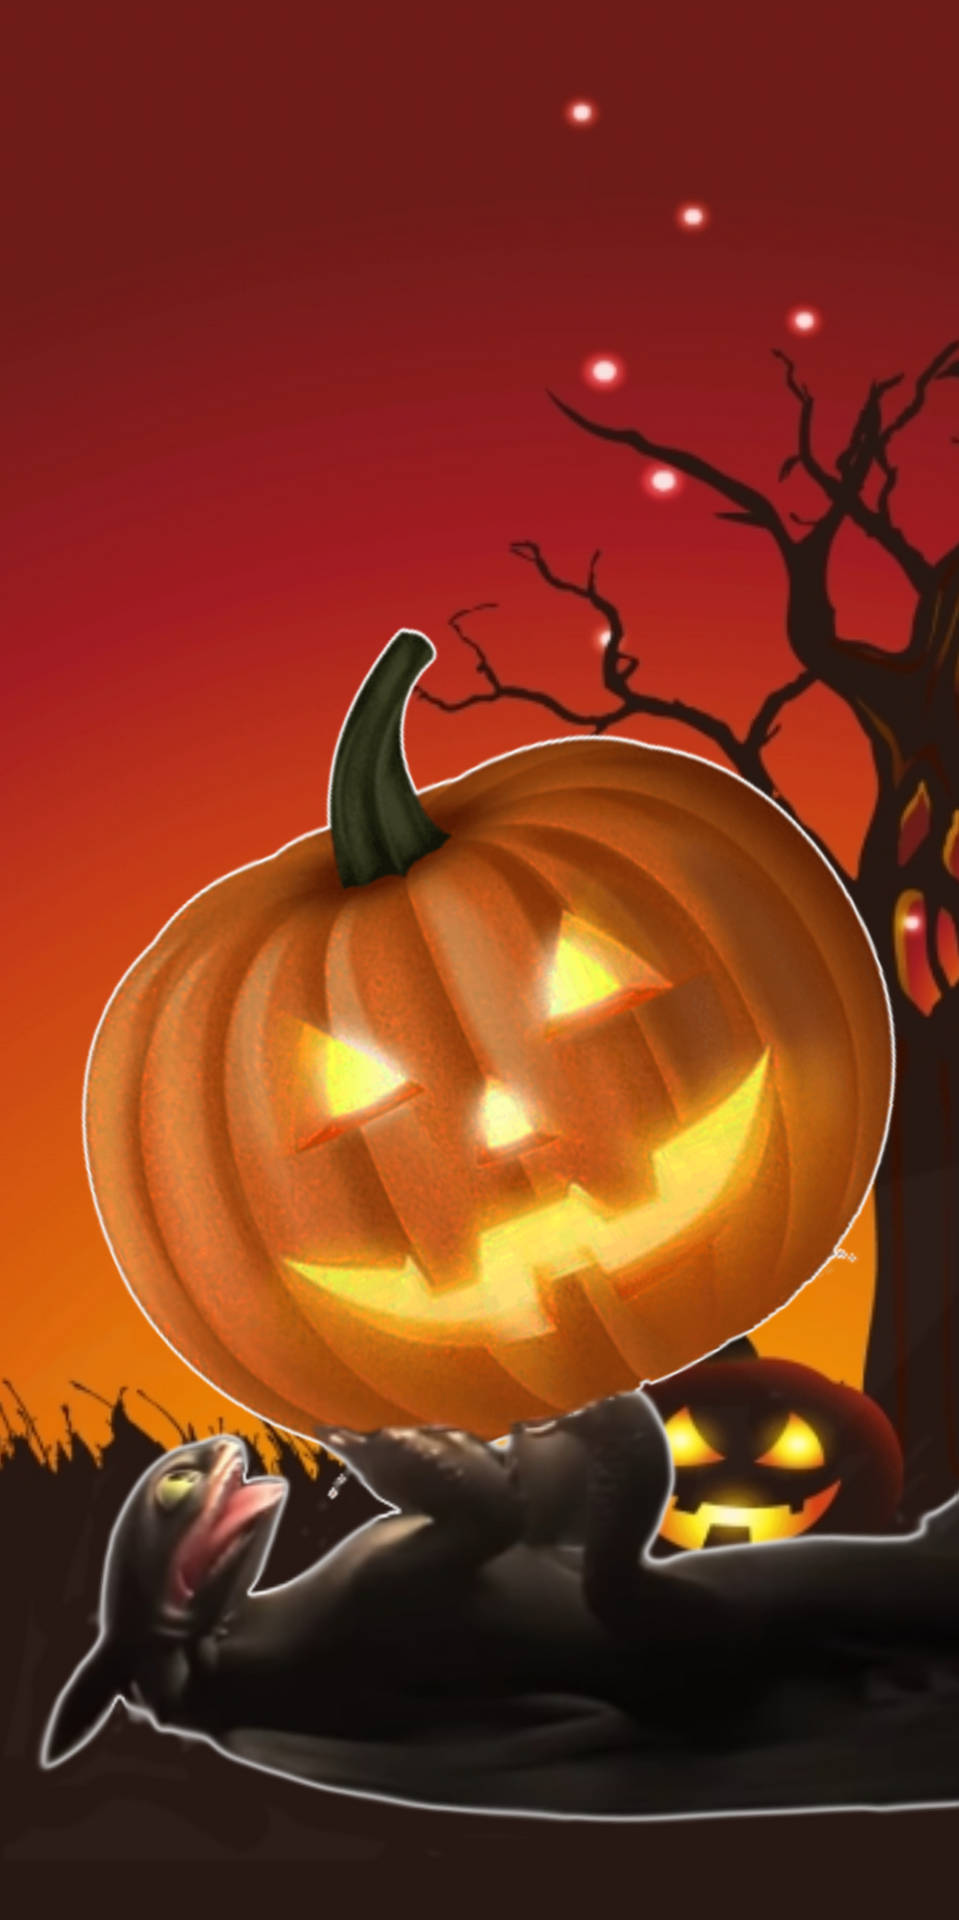 Pumpkin And Toothless Halloween Phone